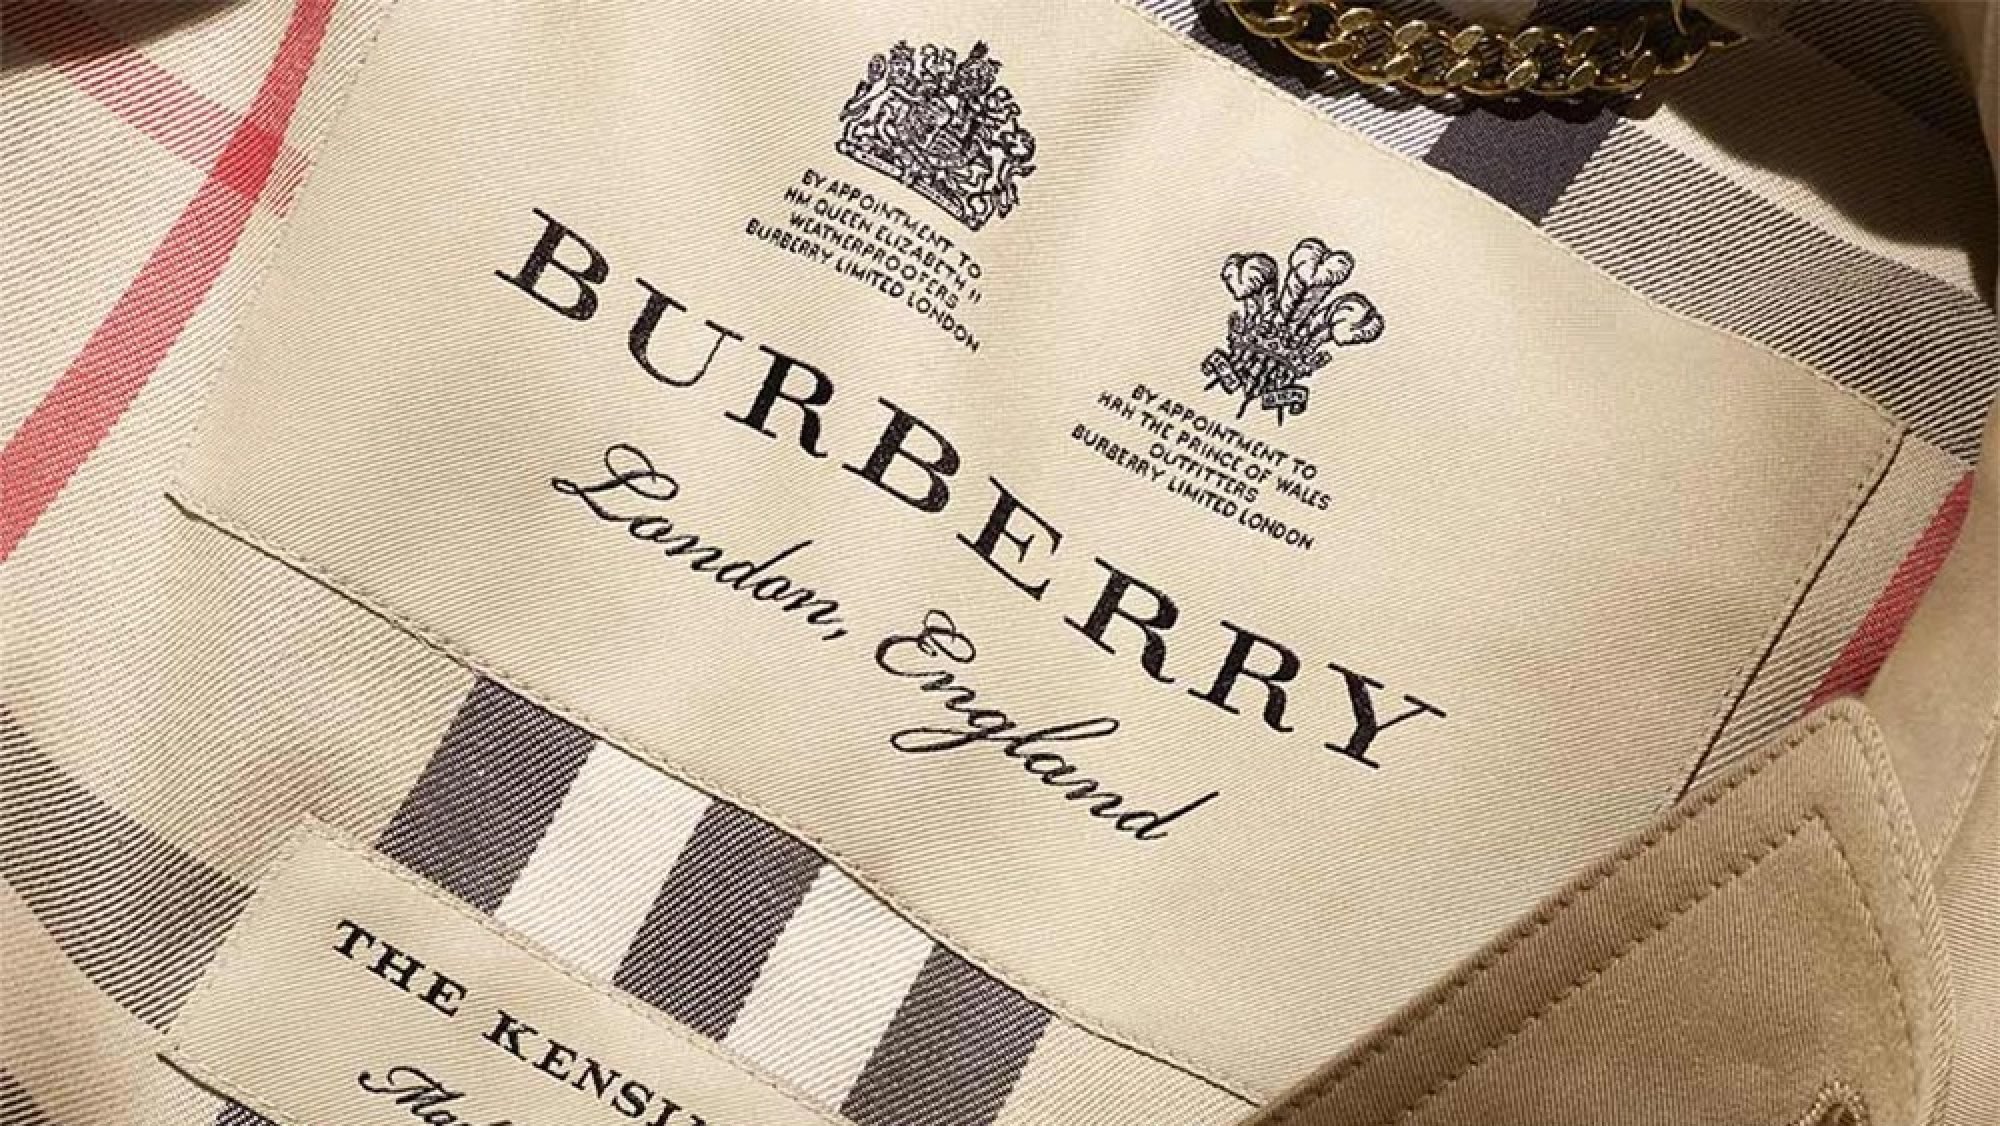 Burberry, Barbour, Launer: brands face losing royal warrants after